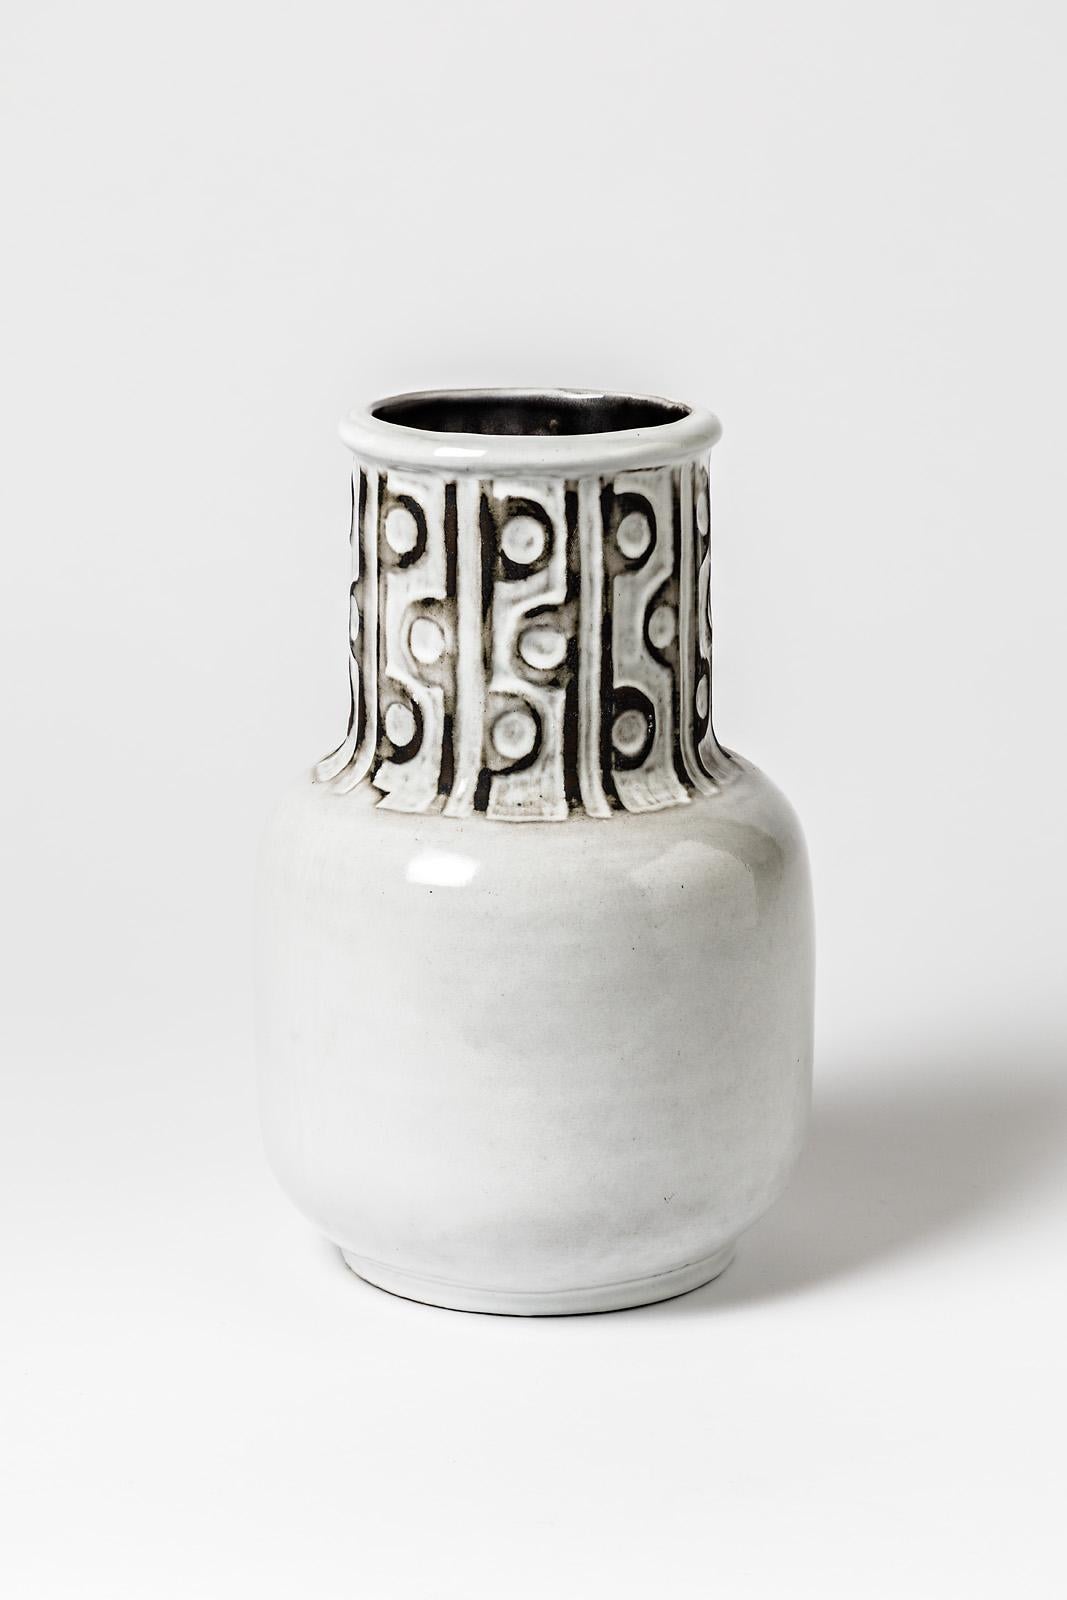 Beaux Arts Ceramic Vase with Black and White Glazes Decoration, Signed Polaris, 1970 For Sale